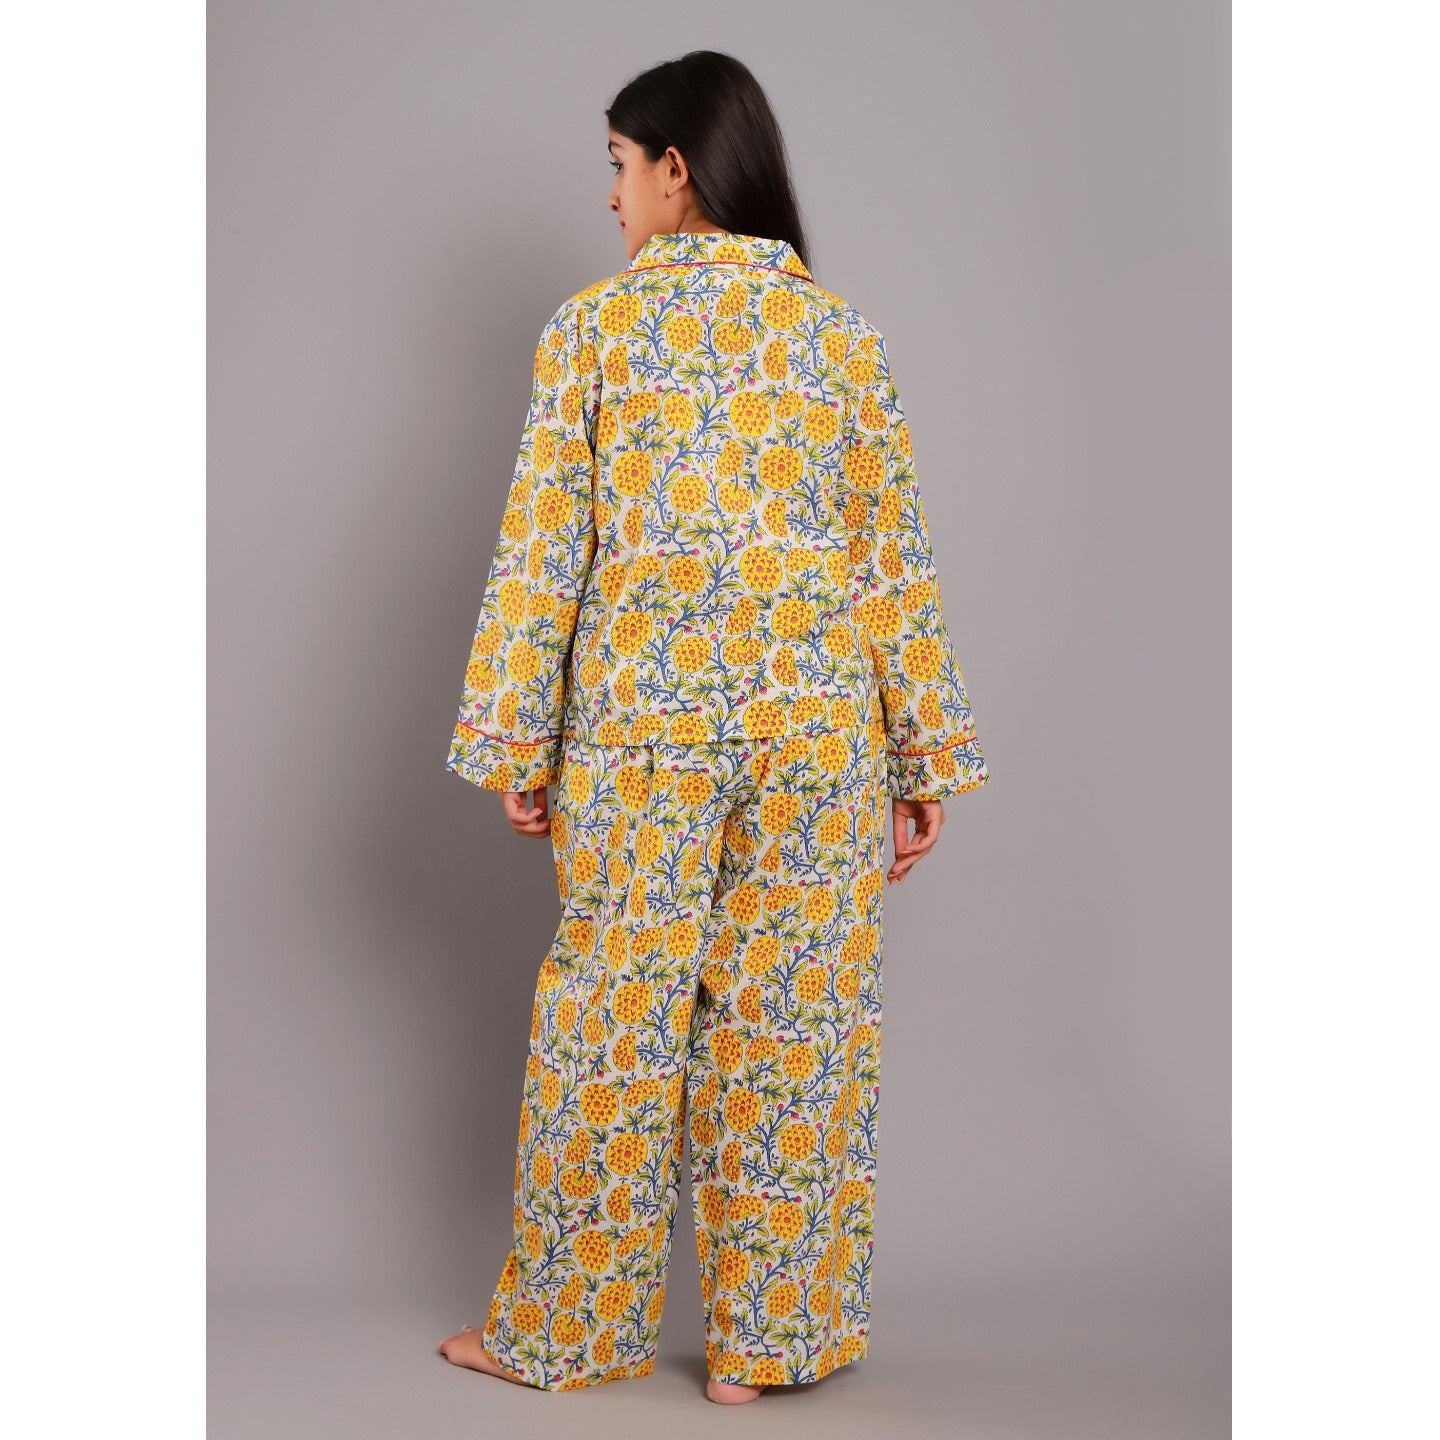 Marigold night Suit PJ Set Yellow